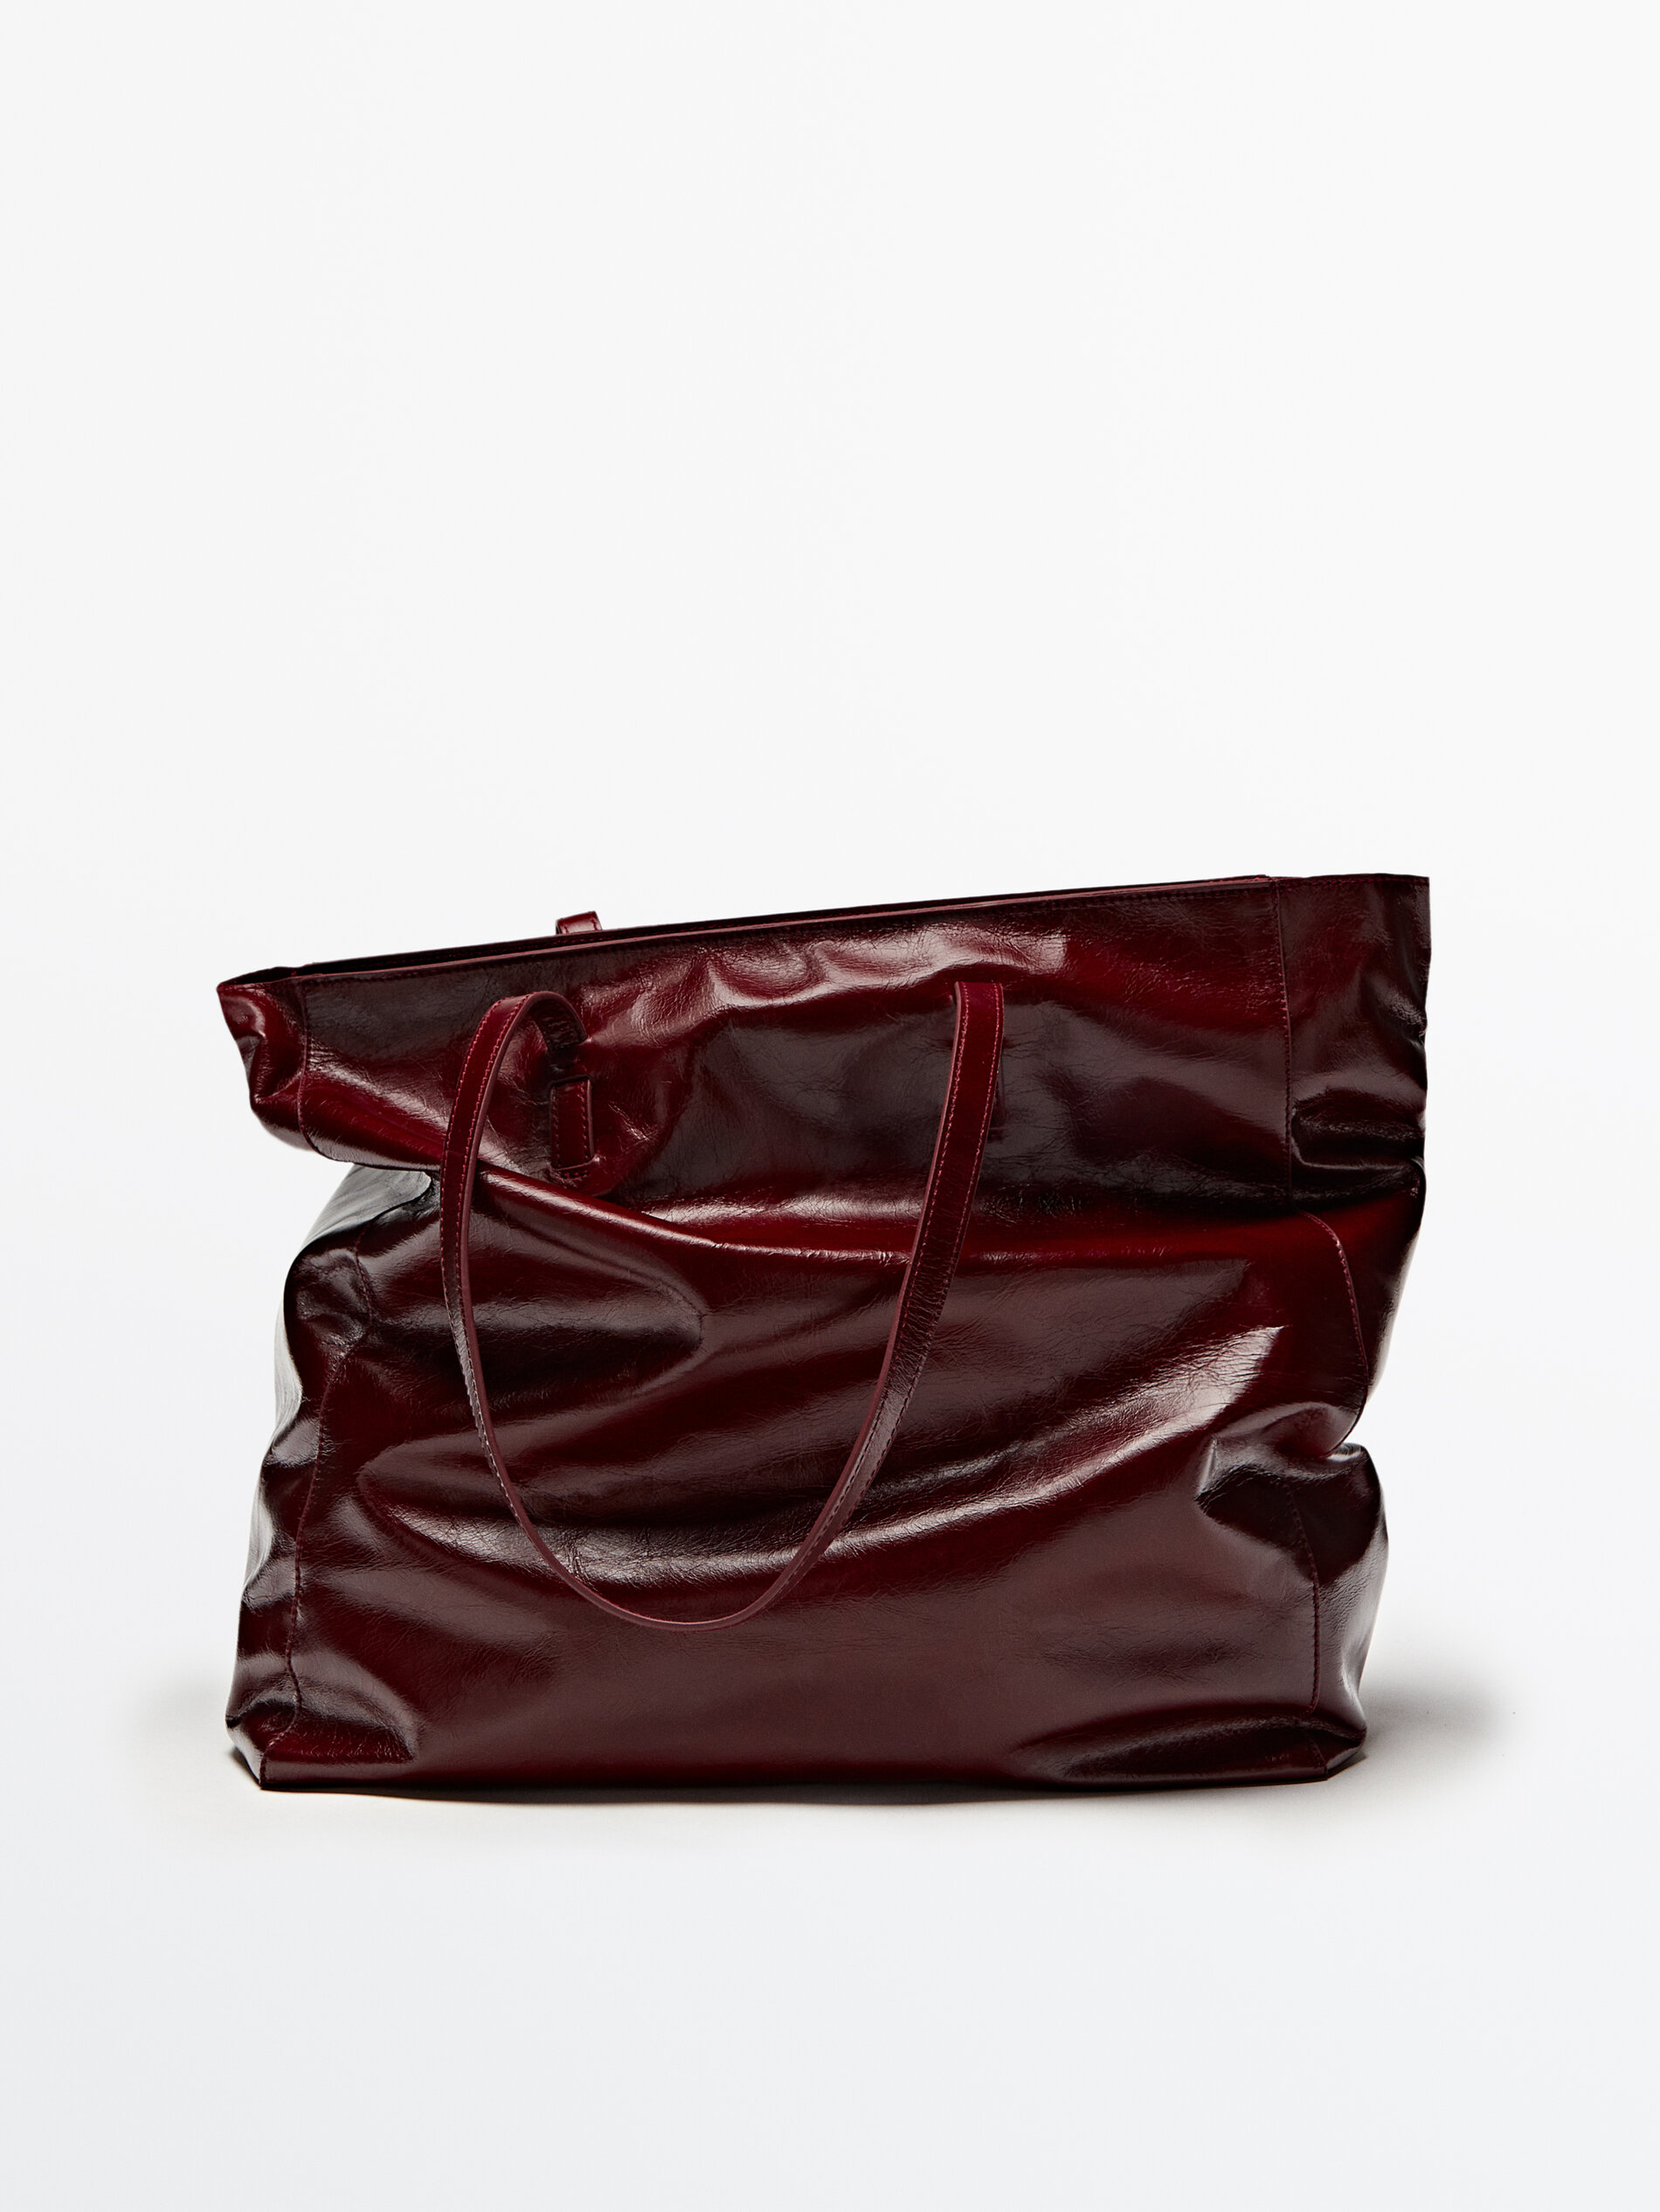 The Lady Leather Handbag | Burgundy Collective